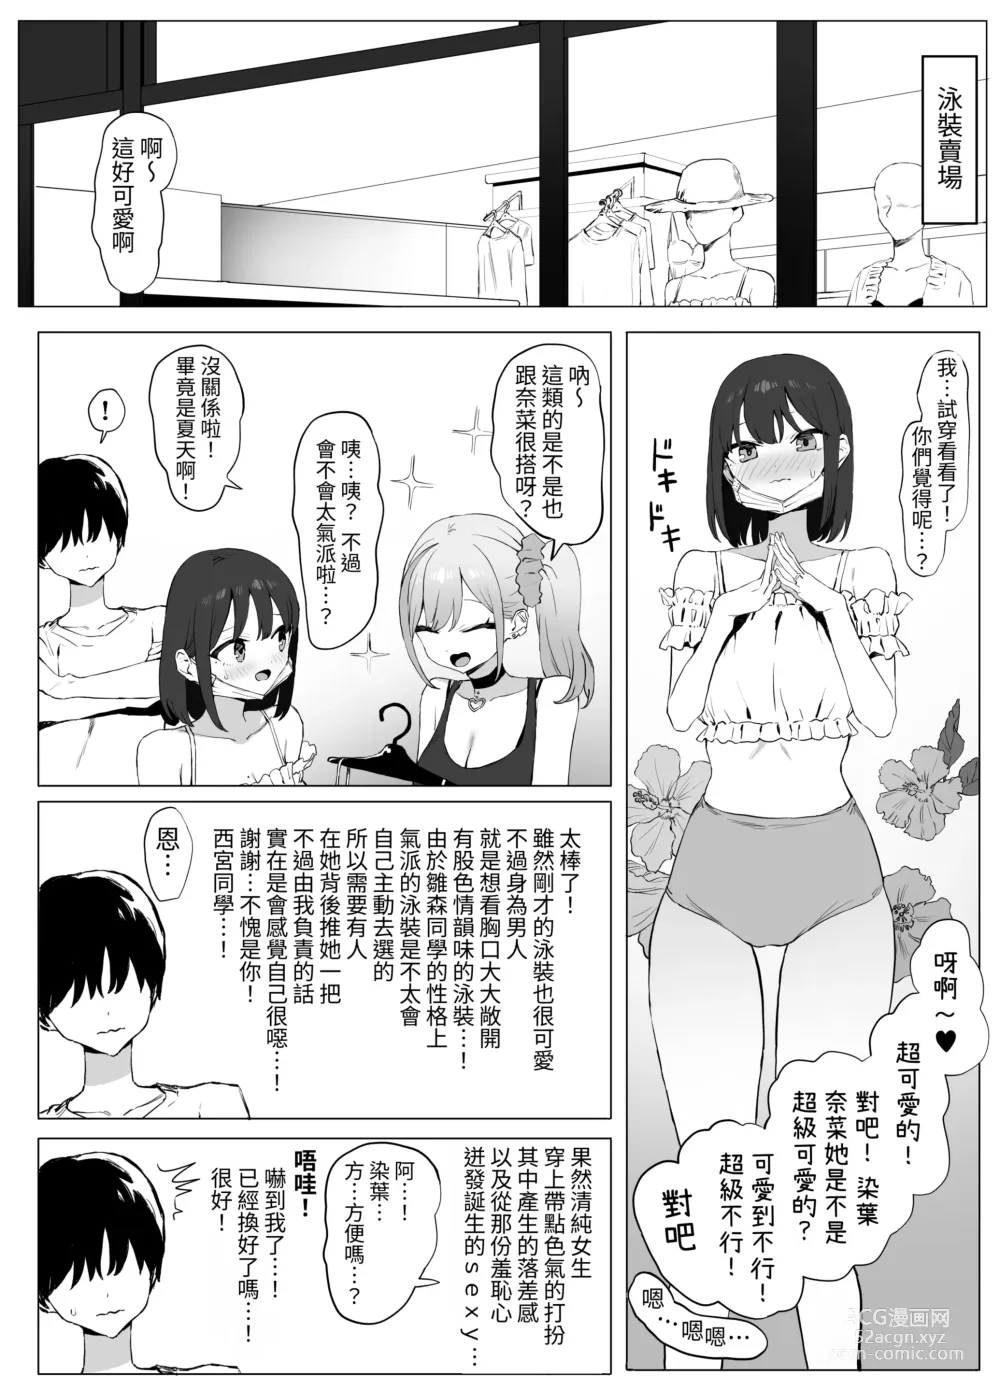 Page 3 of doujinshi Seikoui Jisshuu 2